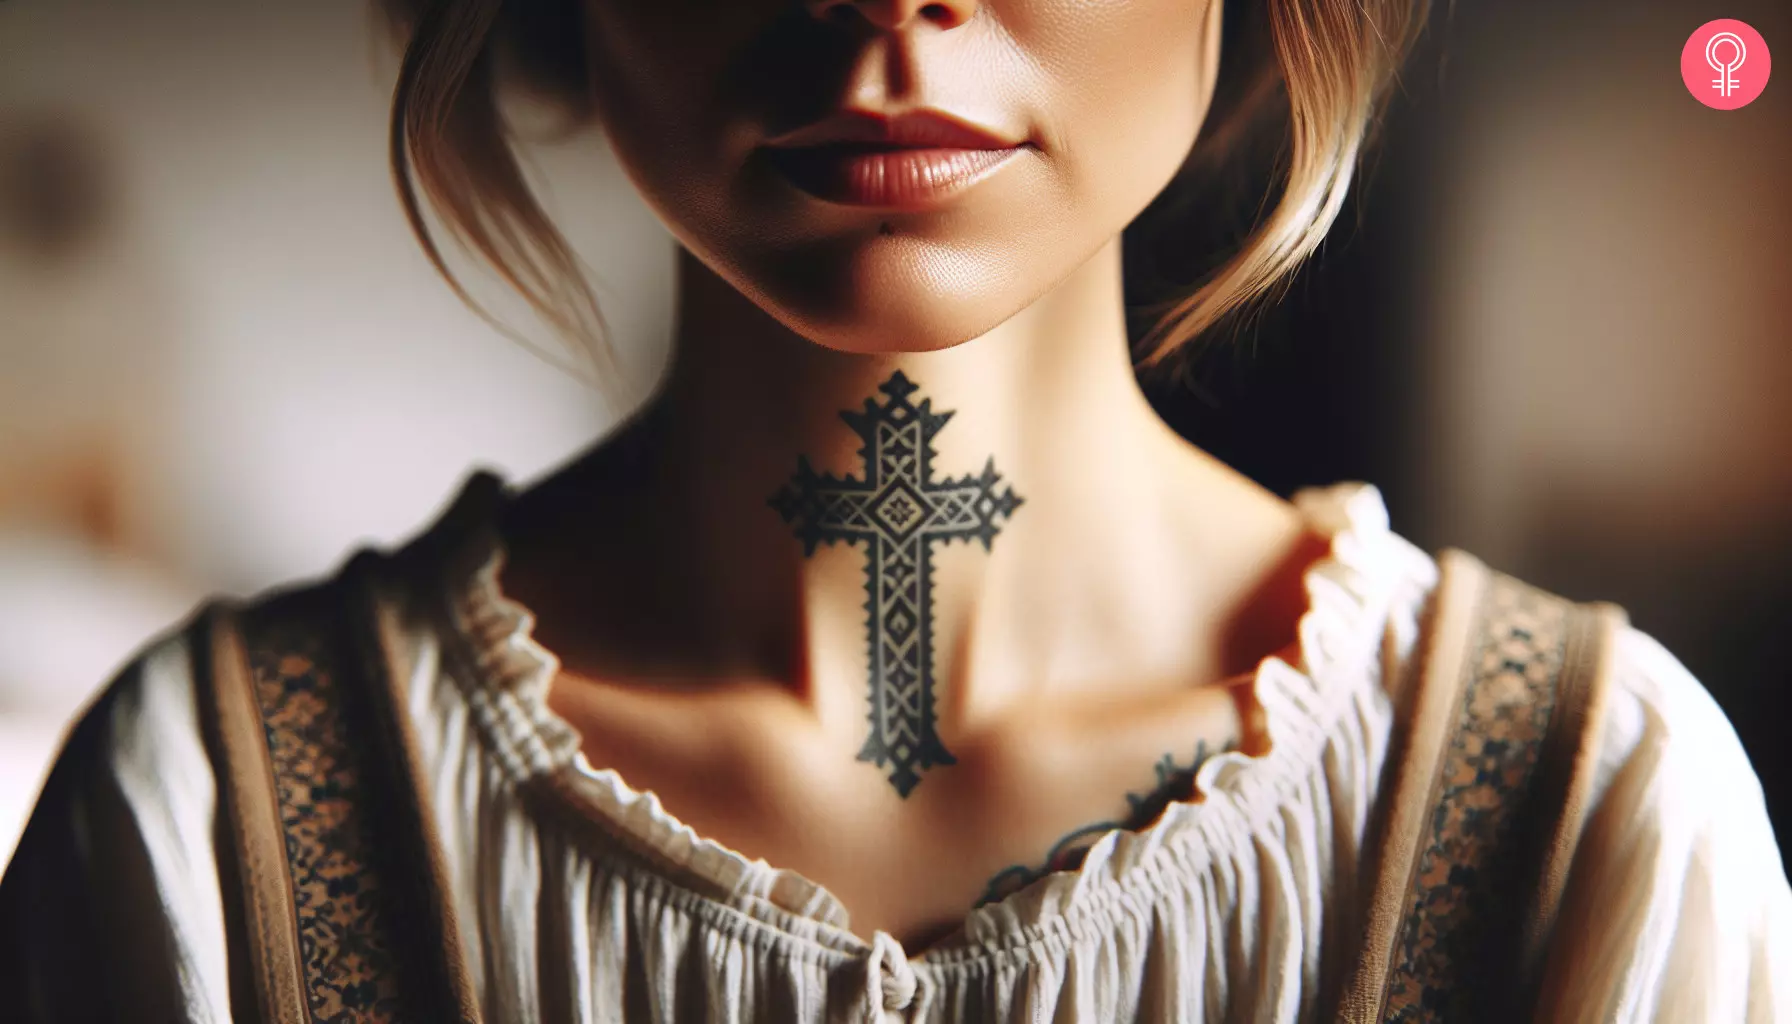 A cross neck tattoo